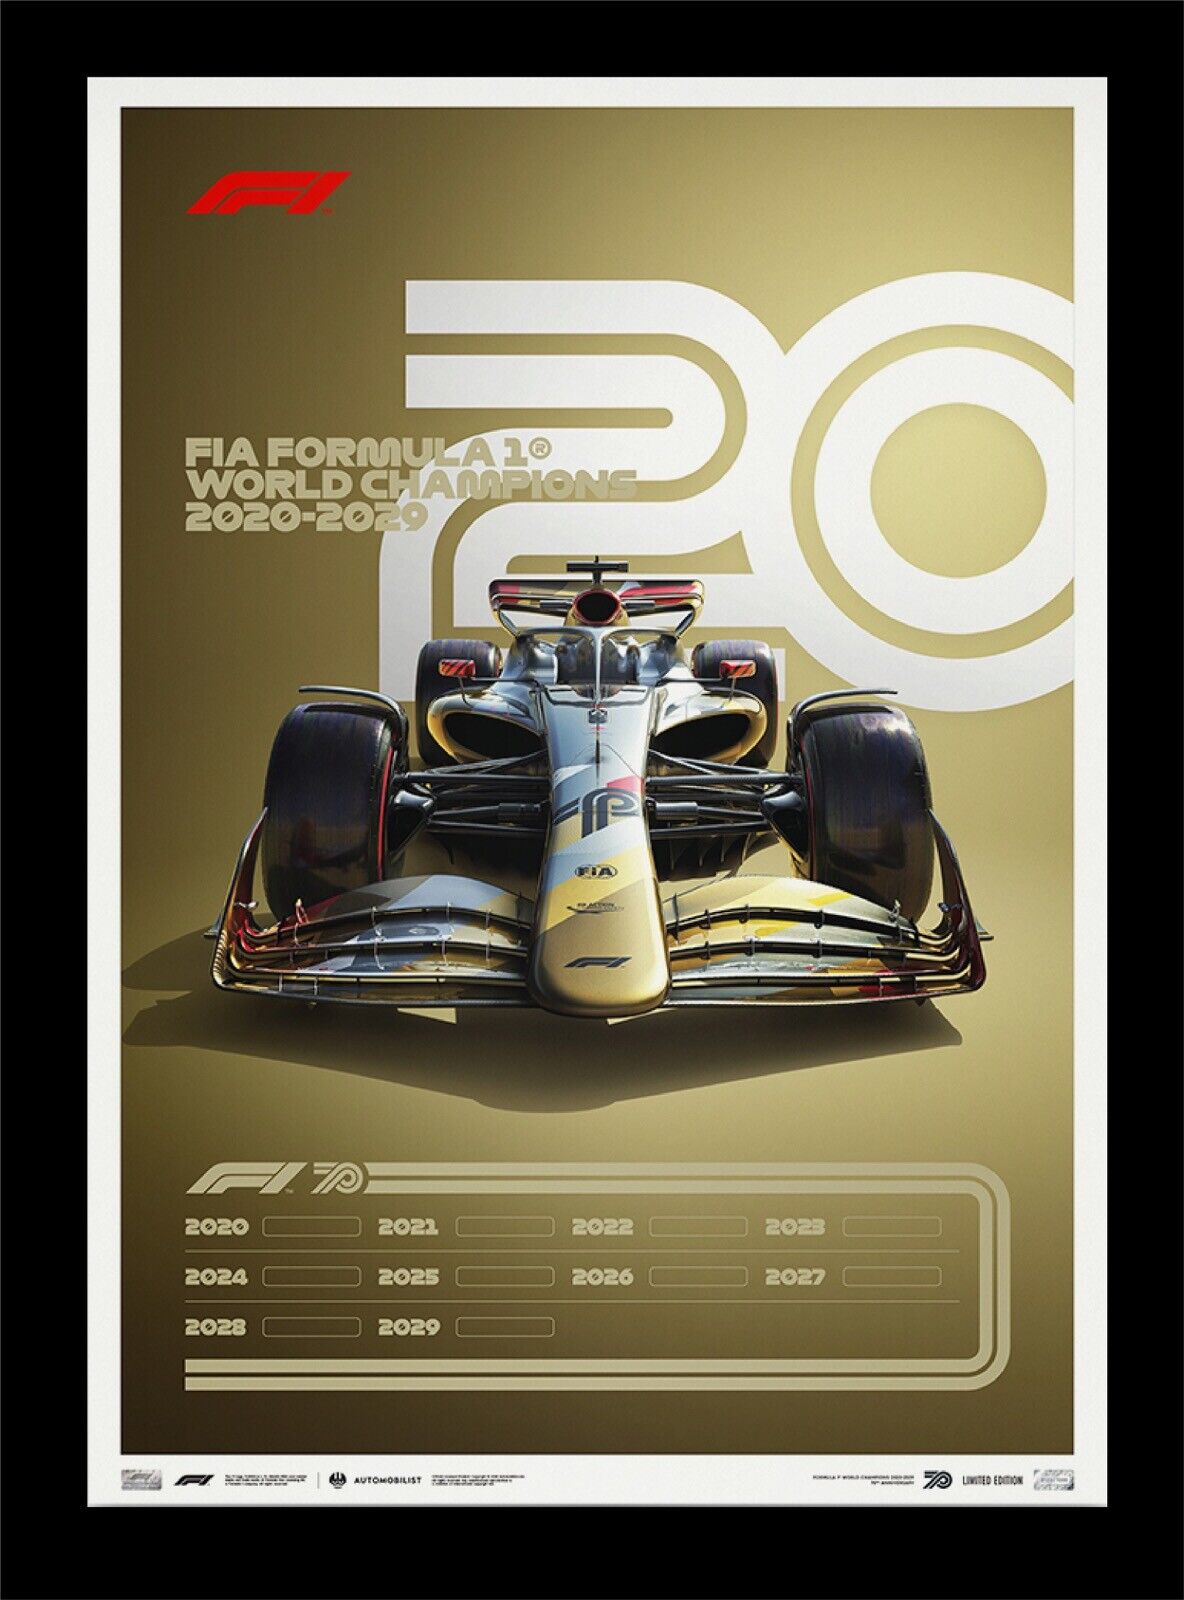 2020s FIA Formula 1 World Champions Future F1 Car 2022 Art Print Poster LtEd